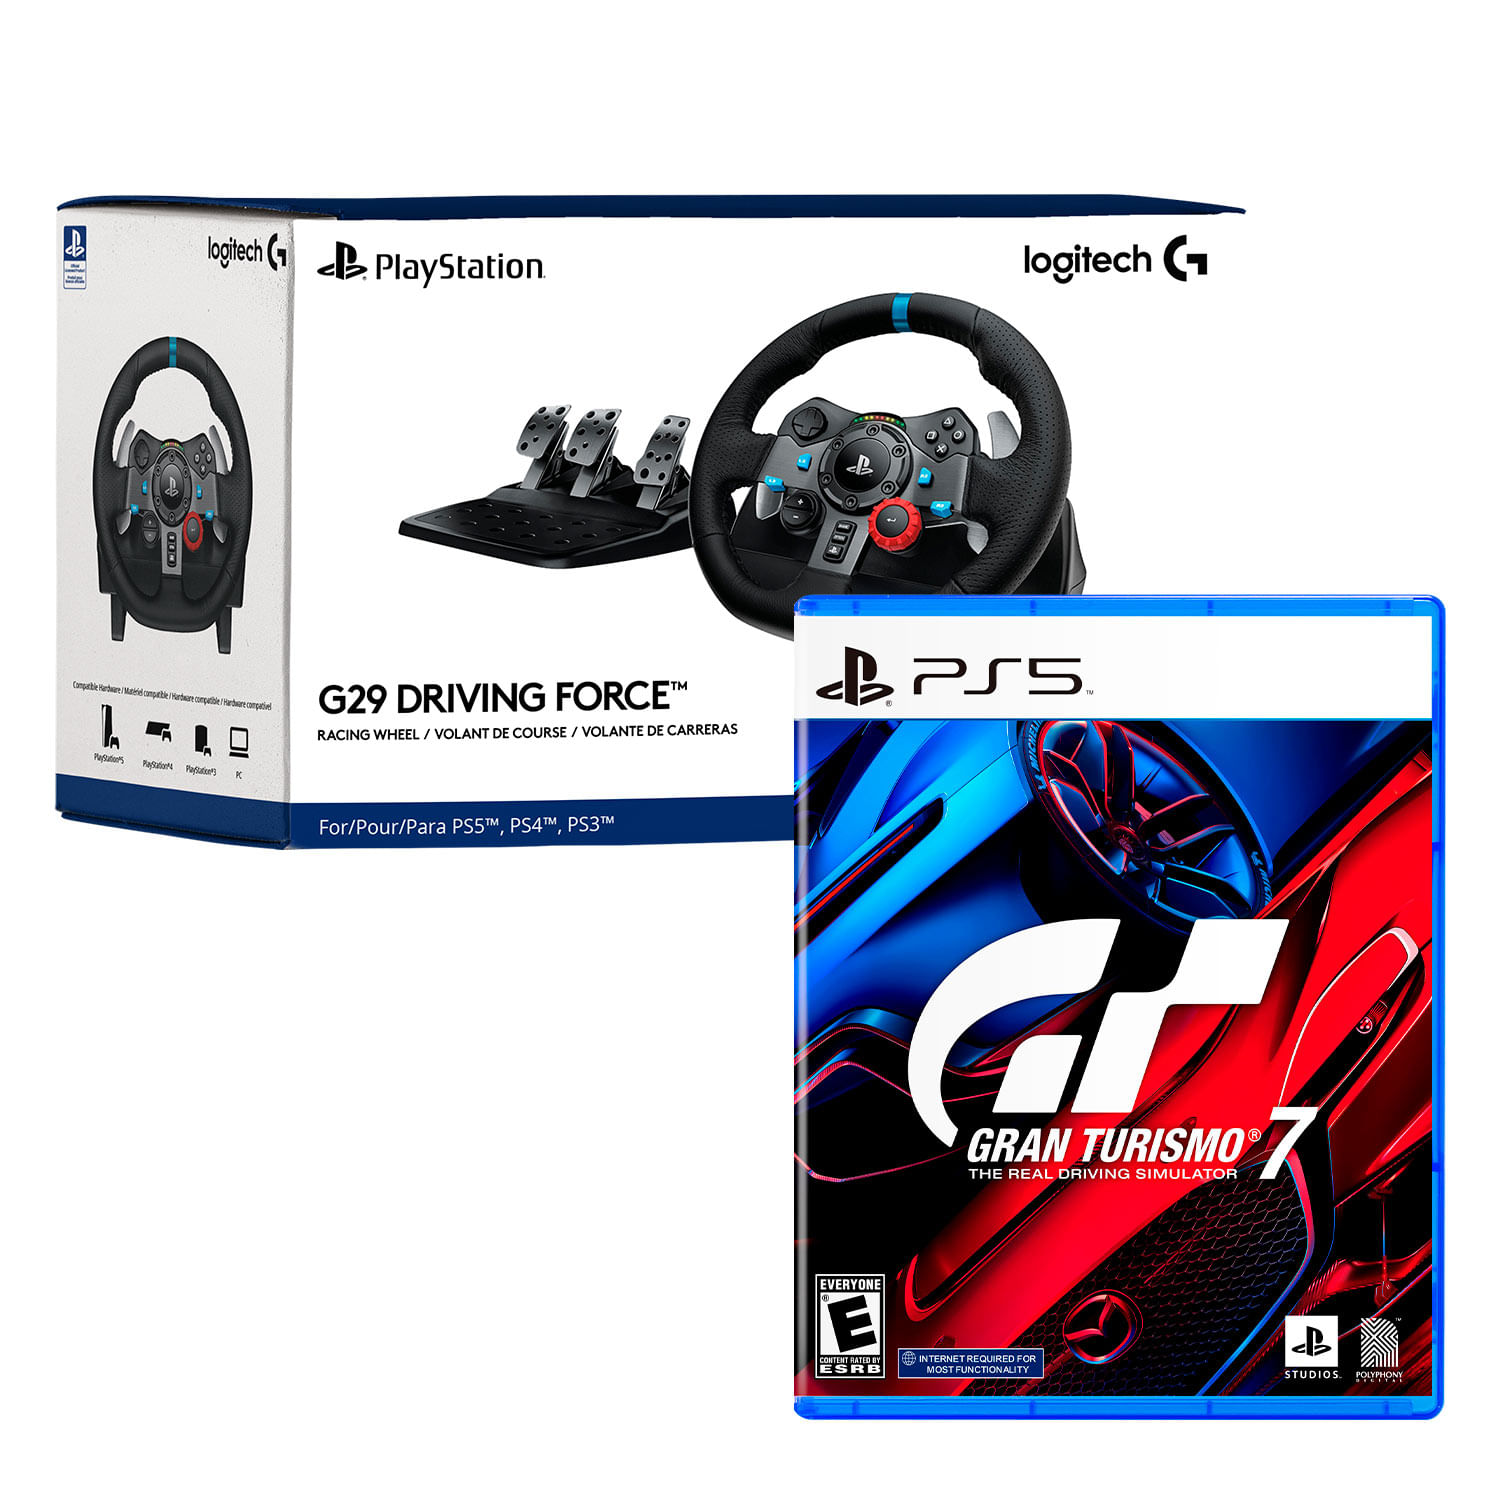 Timon Con Pedal Logitech G29 + Gran Turismo 7 Playstation 5